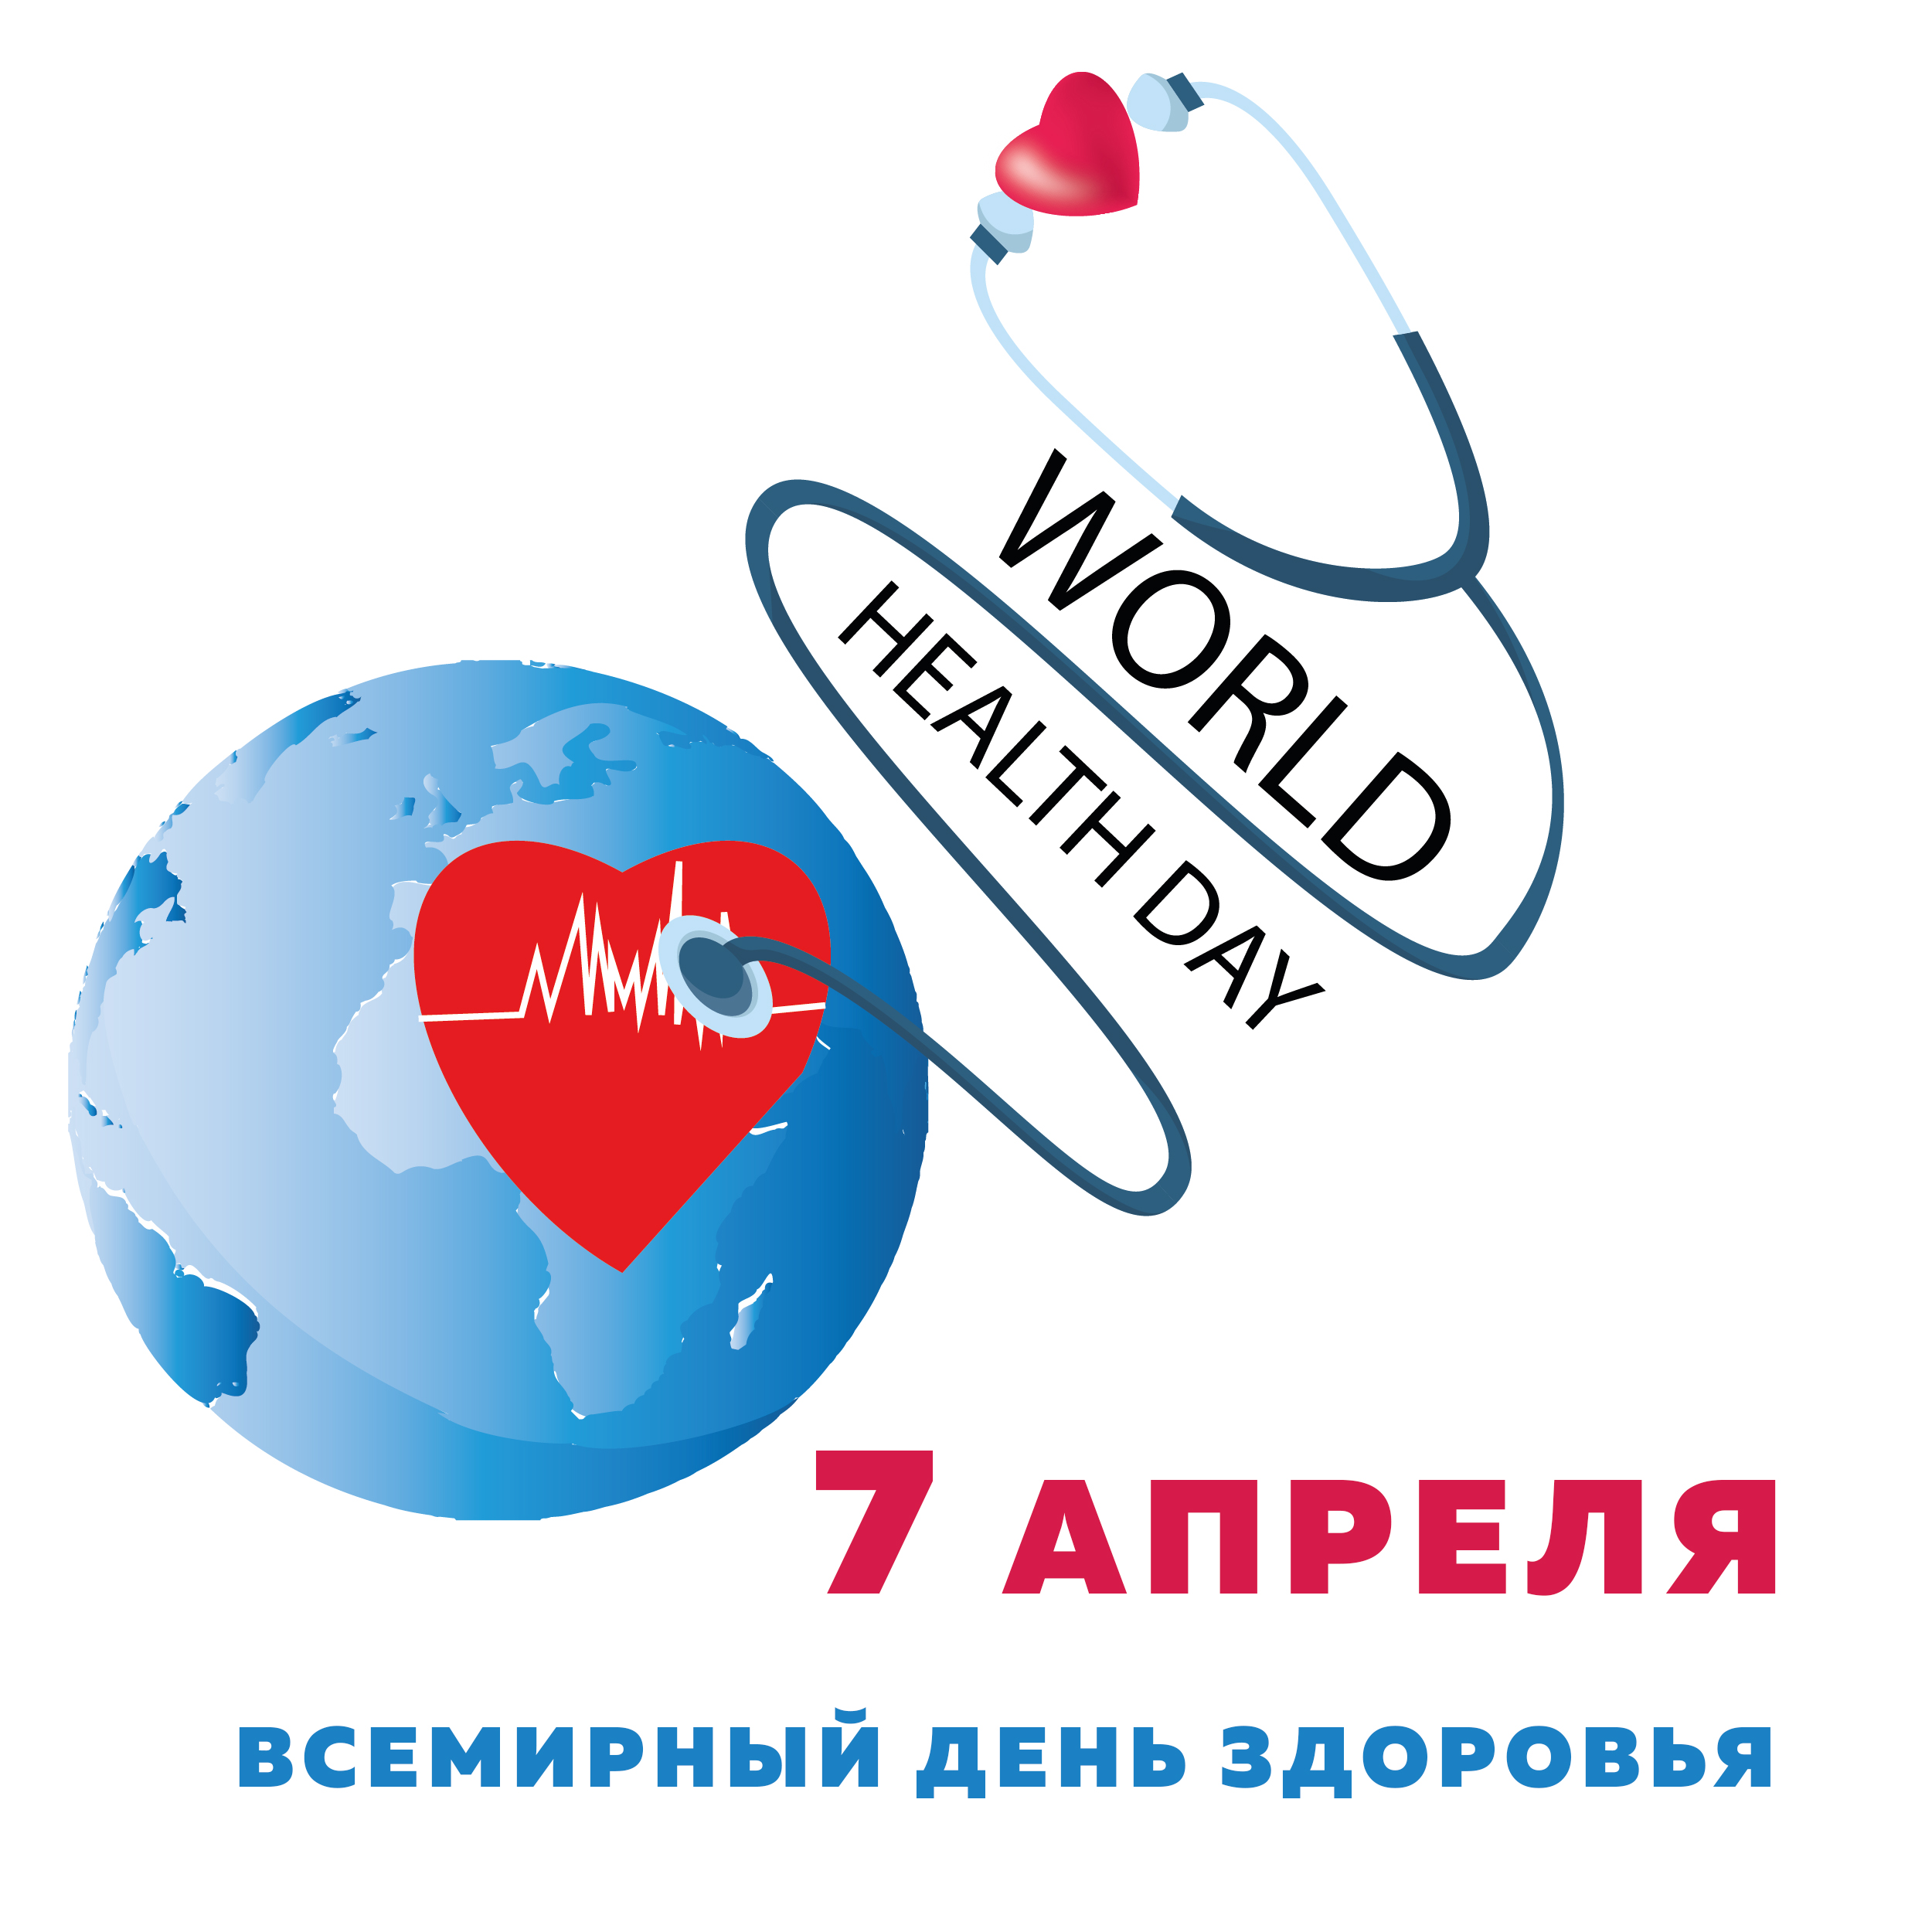 Pngtreeworld health day 2021 image 6057995